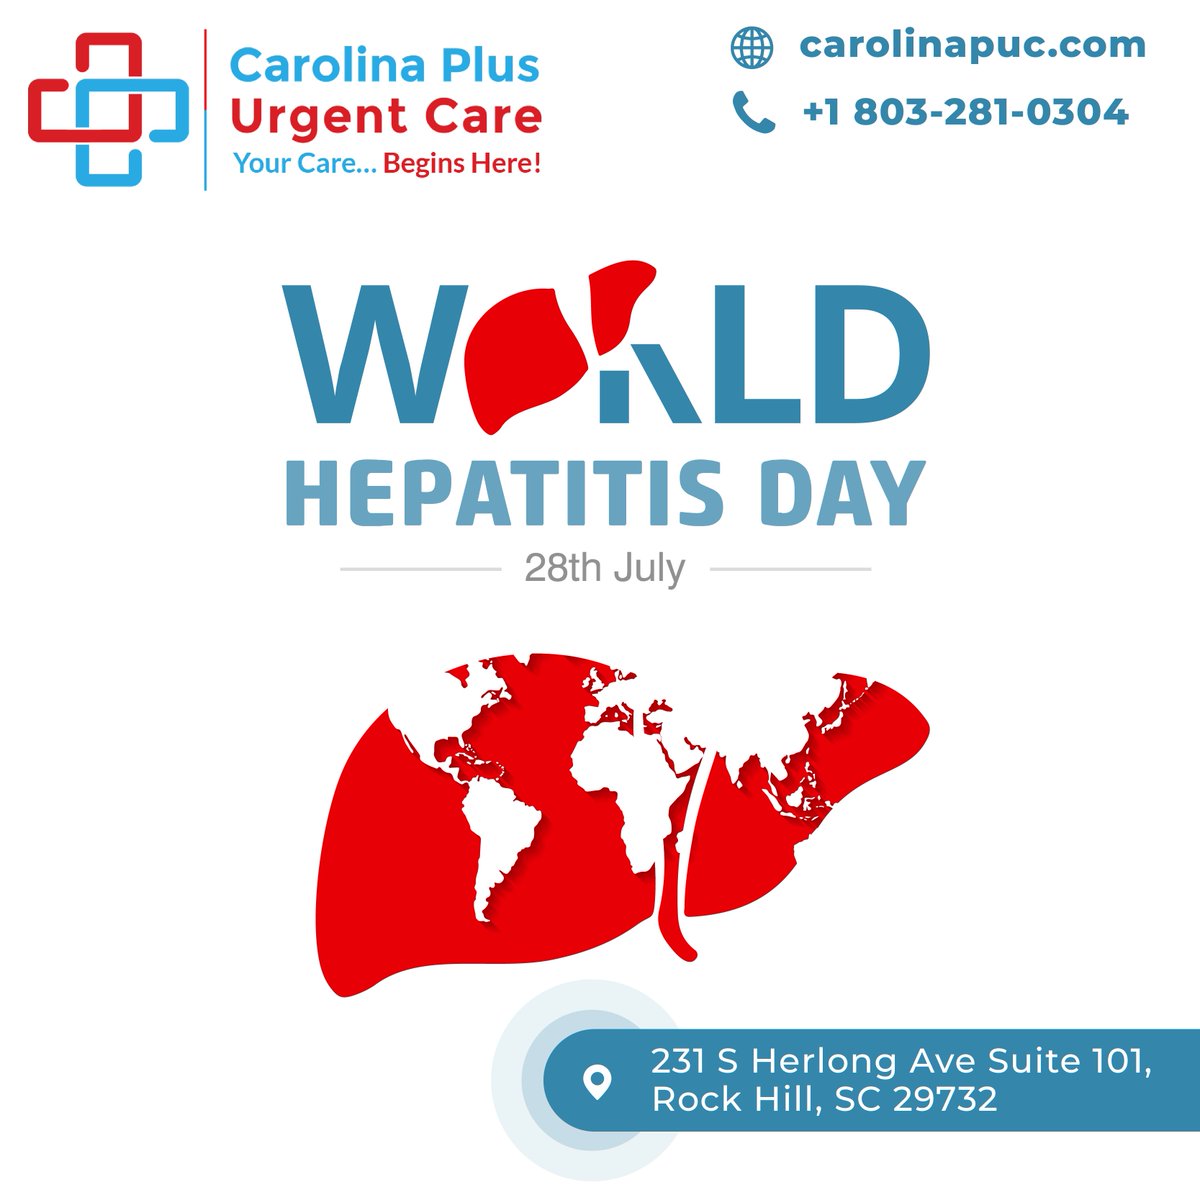 happy hepatitis Day!

.
.
.
#worldhepatitisday #HepatitisDay #WorldHepatitisDay #hepatitis #InternationalNews #urgentcare #urganetcareus #carolinaplusurgentcare #urgentcarenearme #rockhillsc #rockhill